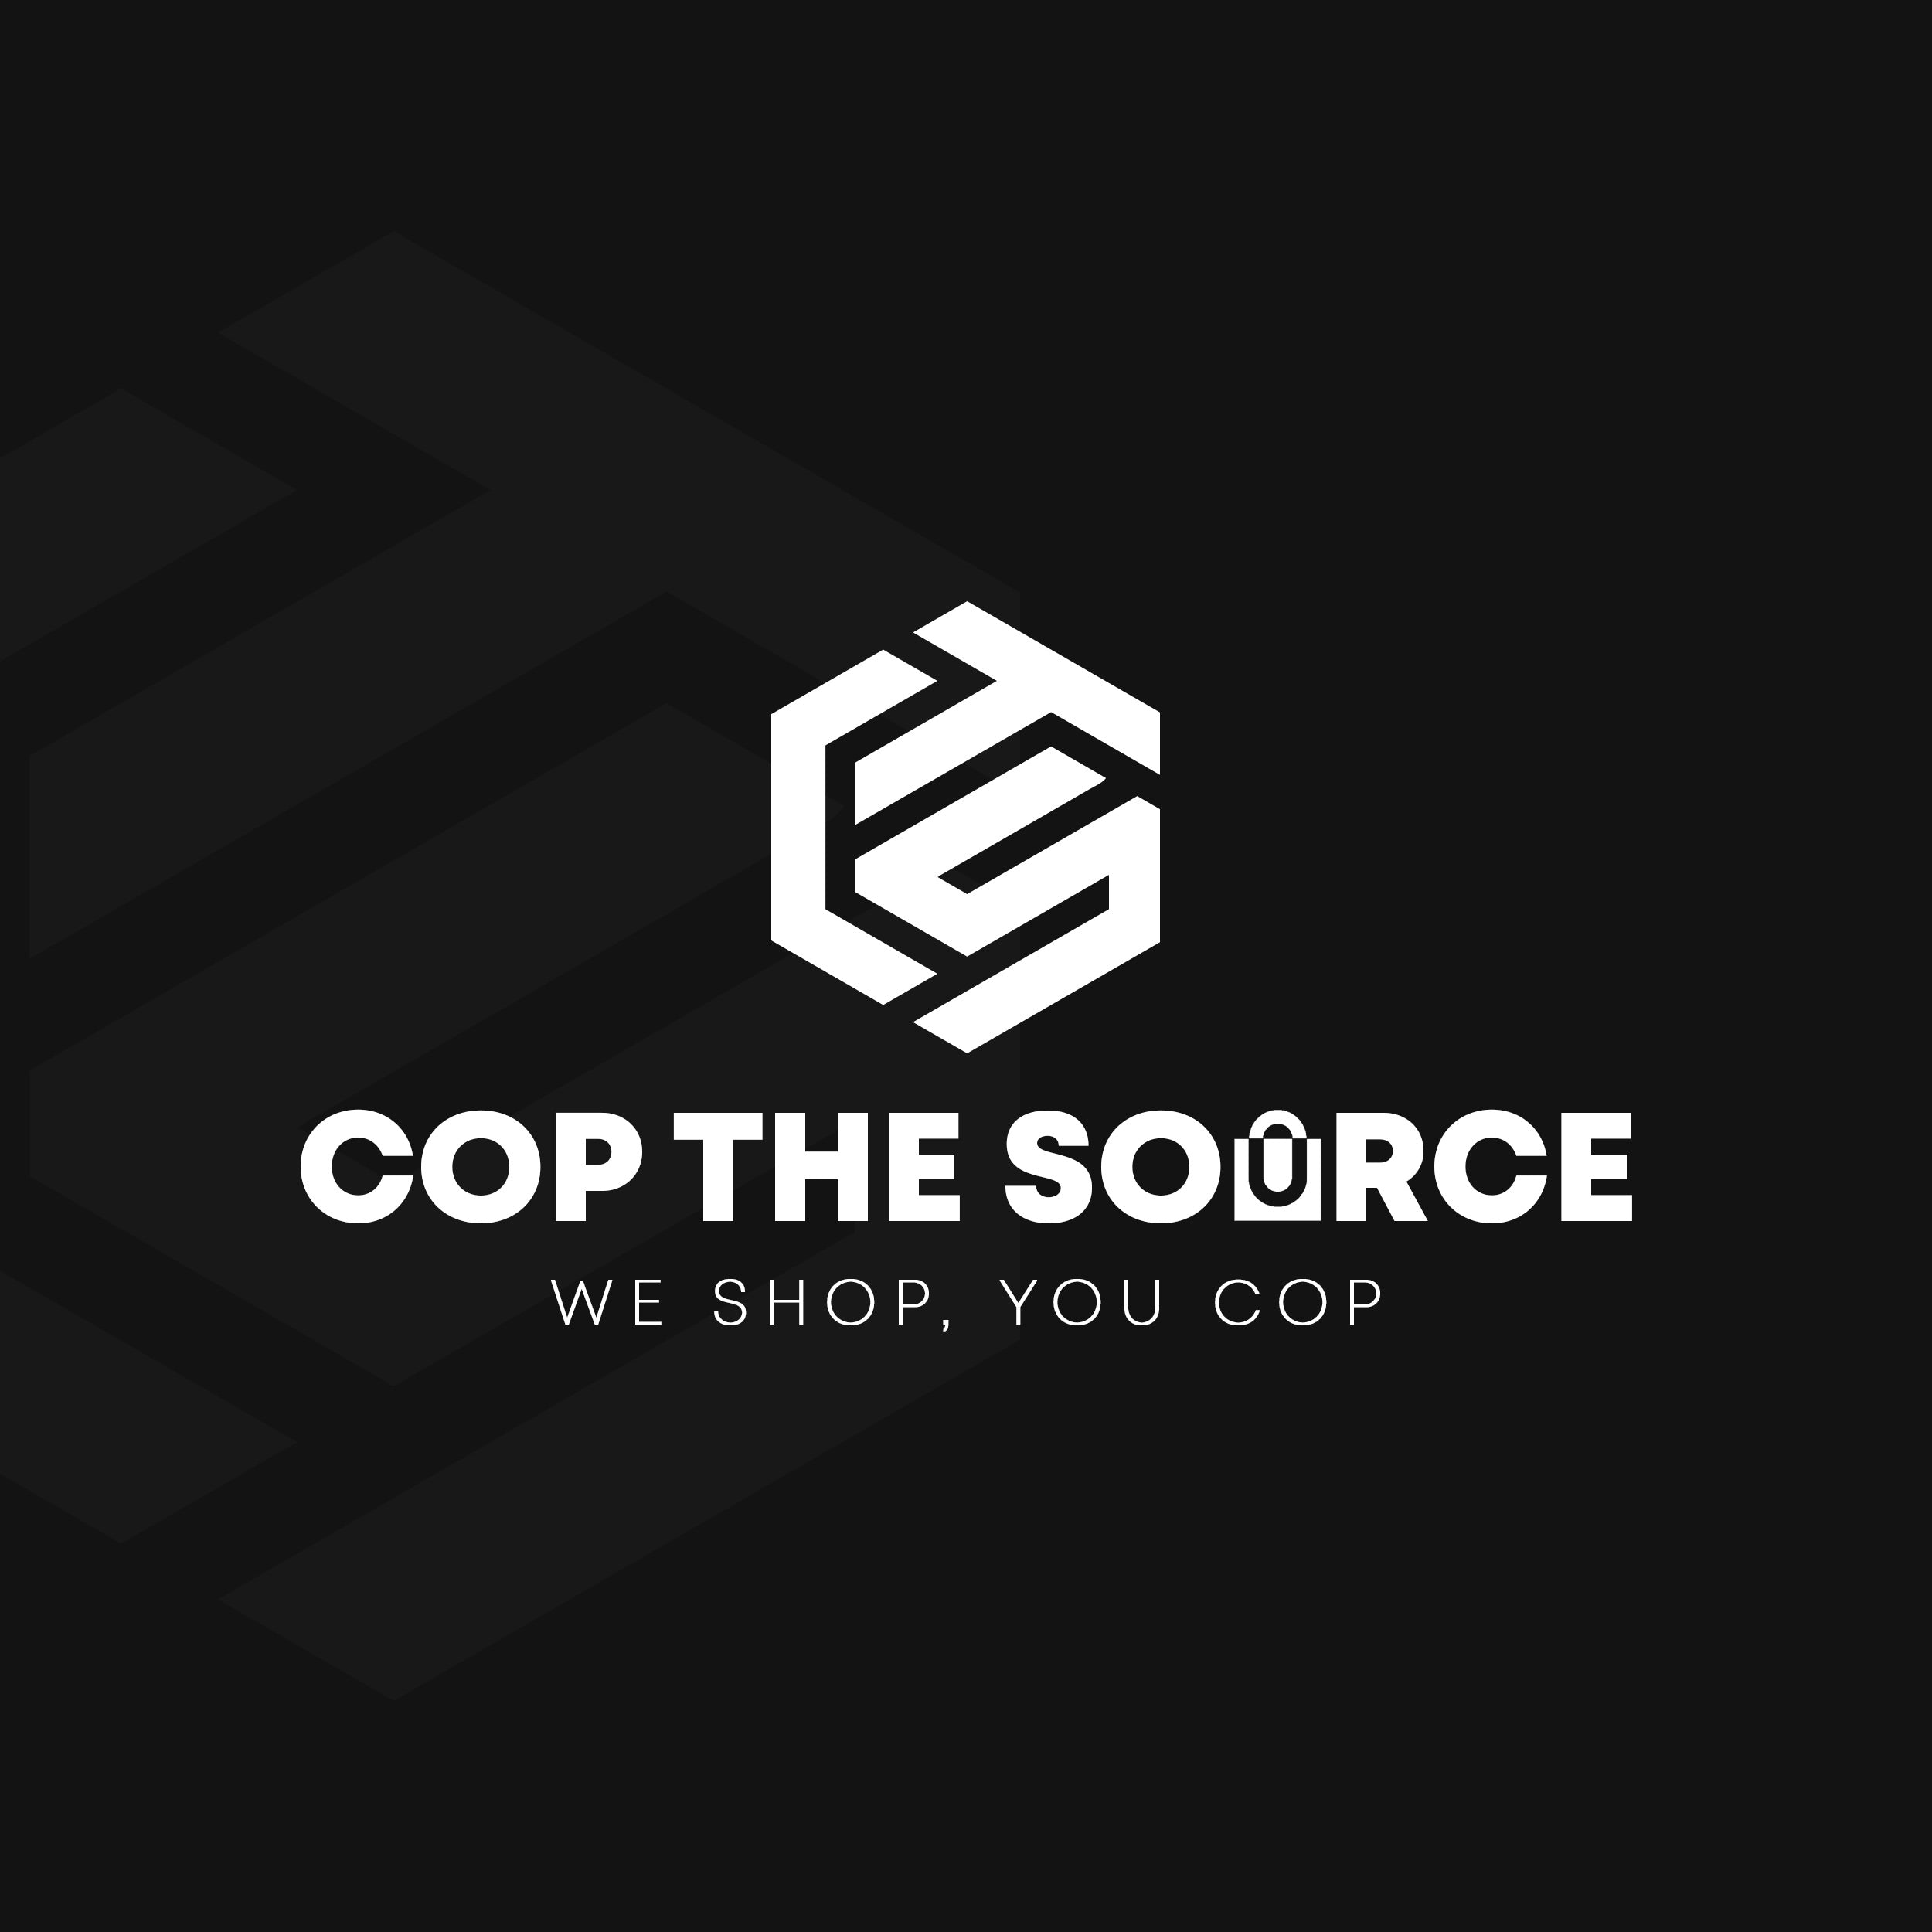 CopTheSource